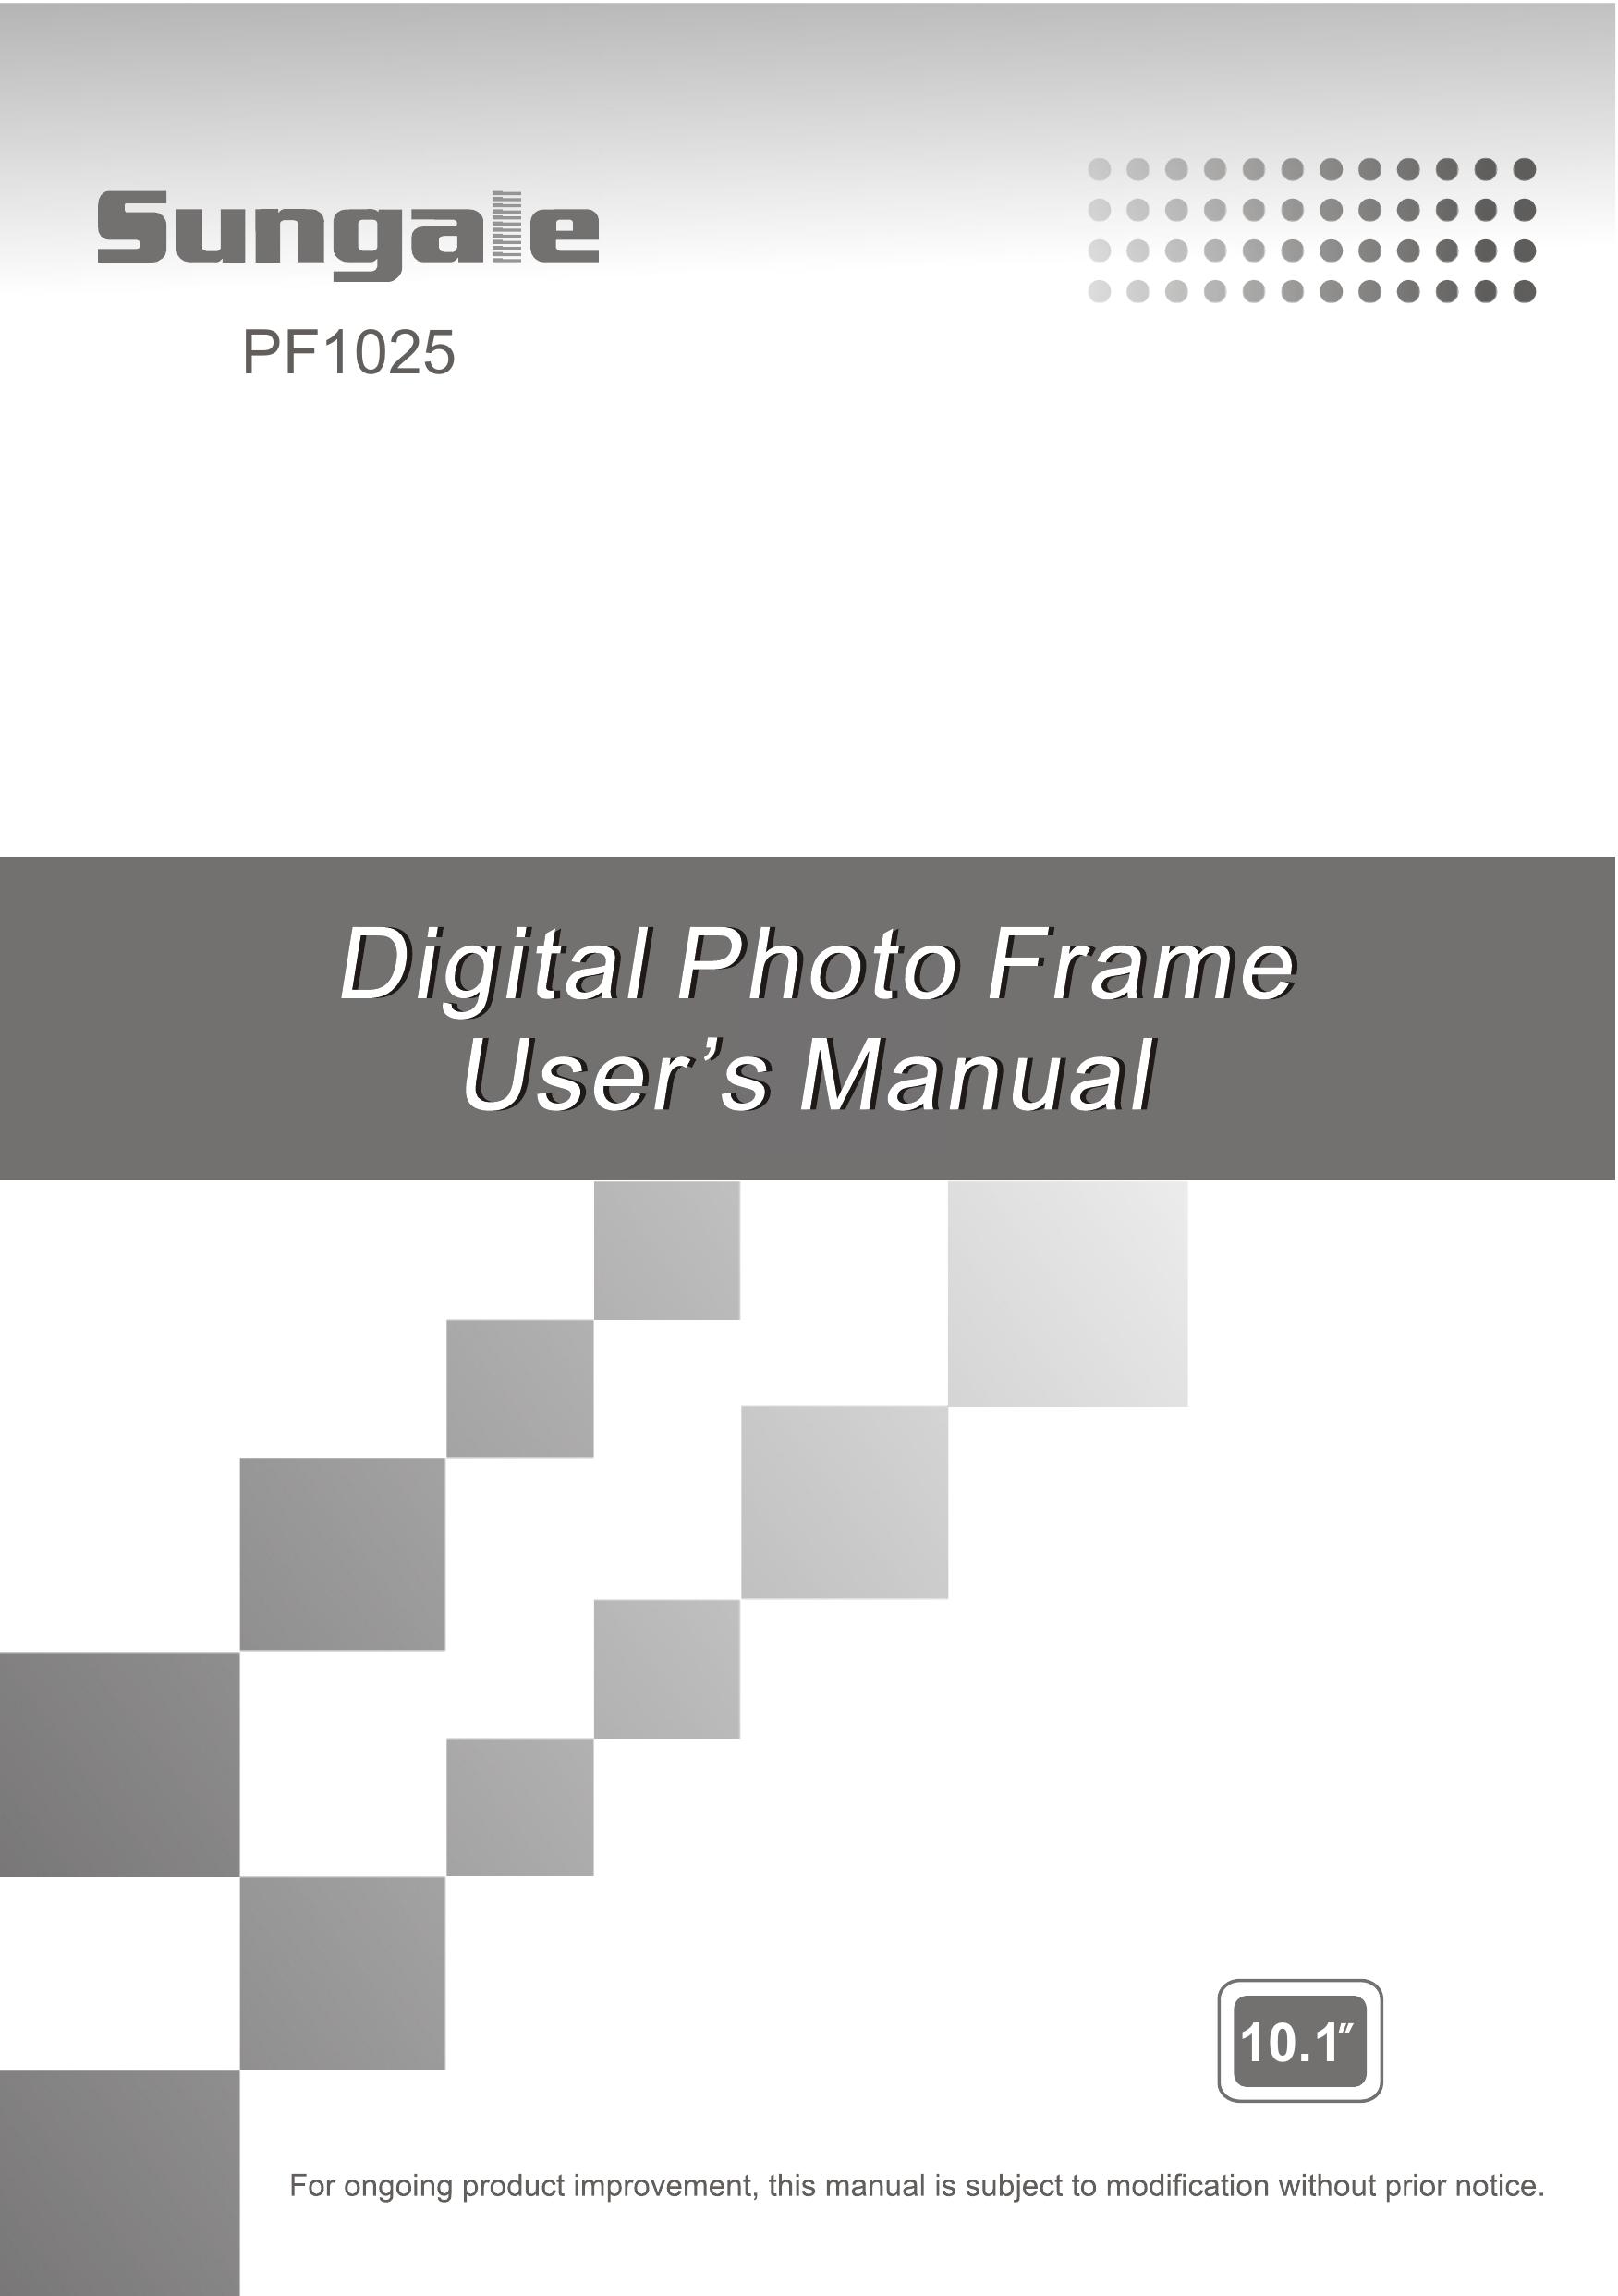 Sungale PF1025 Digital Photo Frame User Manual